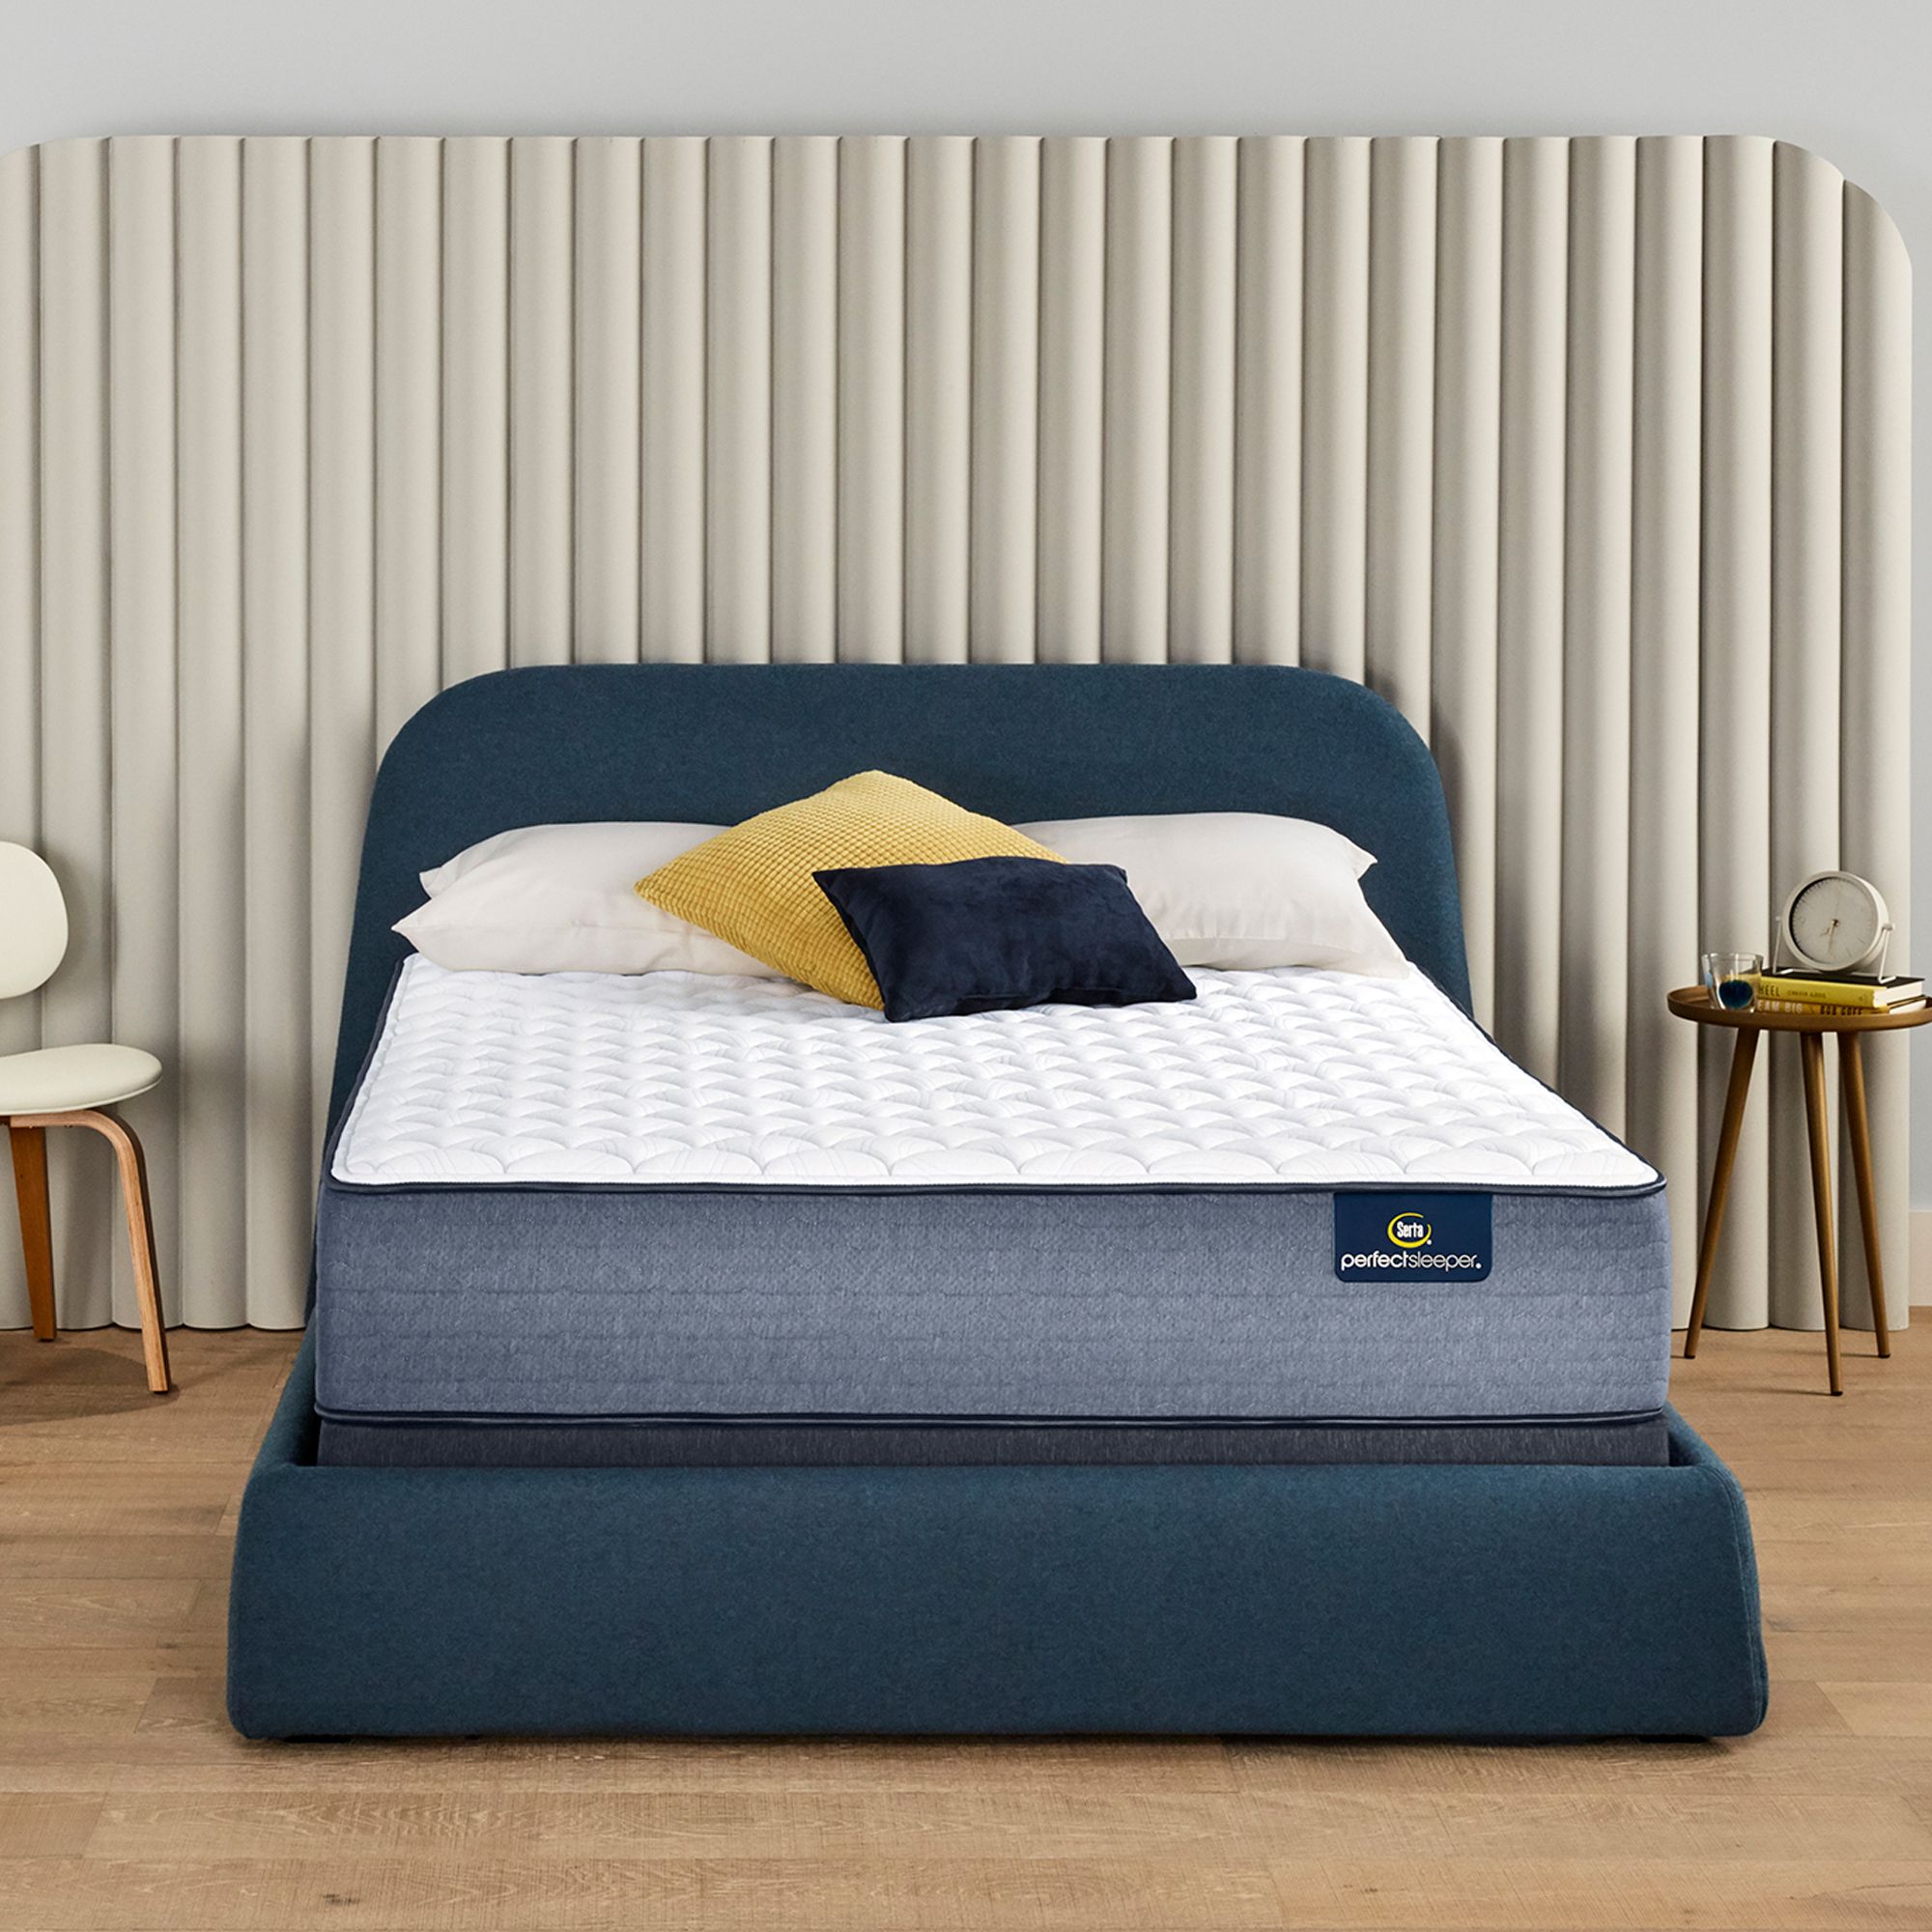 Serta Perfect Sleeper Cobalt Coast Firm Full Size Mattress